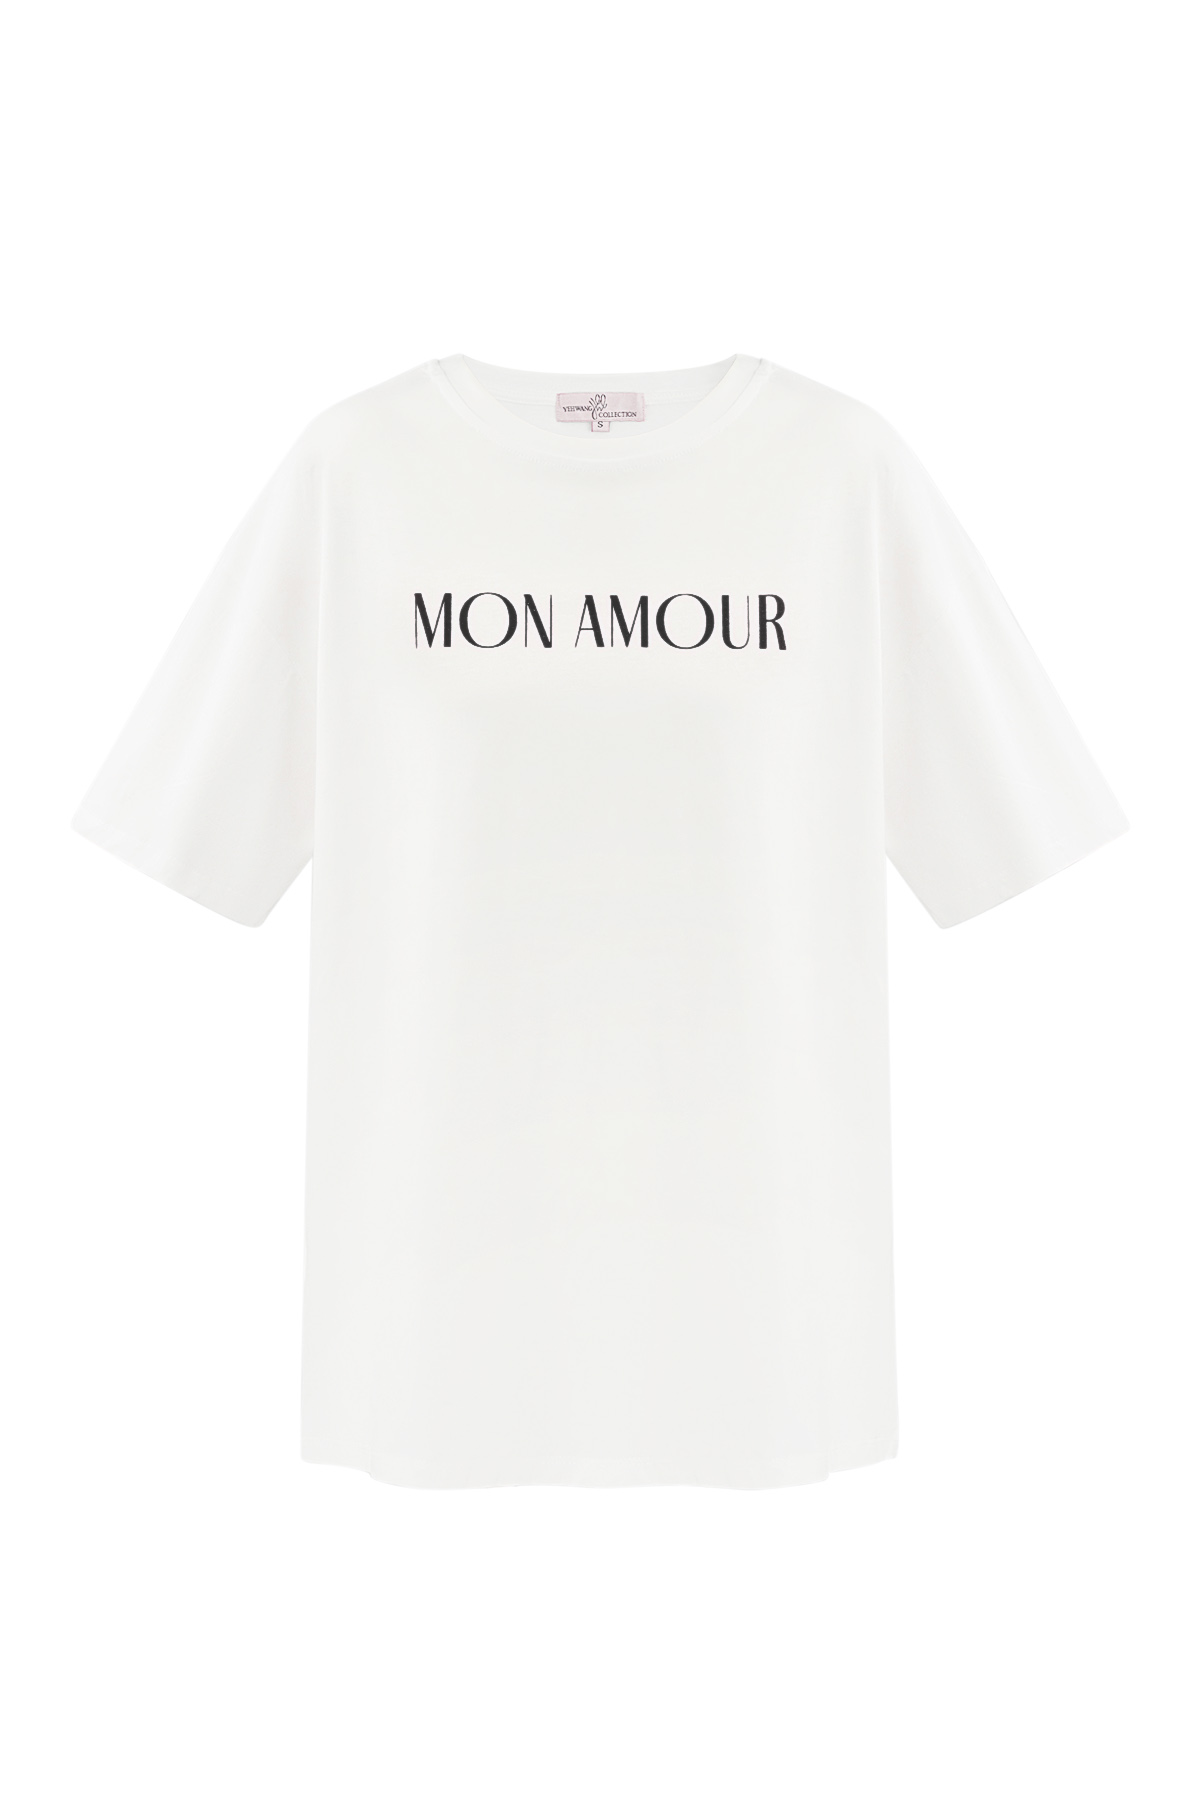 T-shirt mon amour - zwart wit h5 